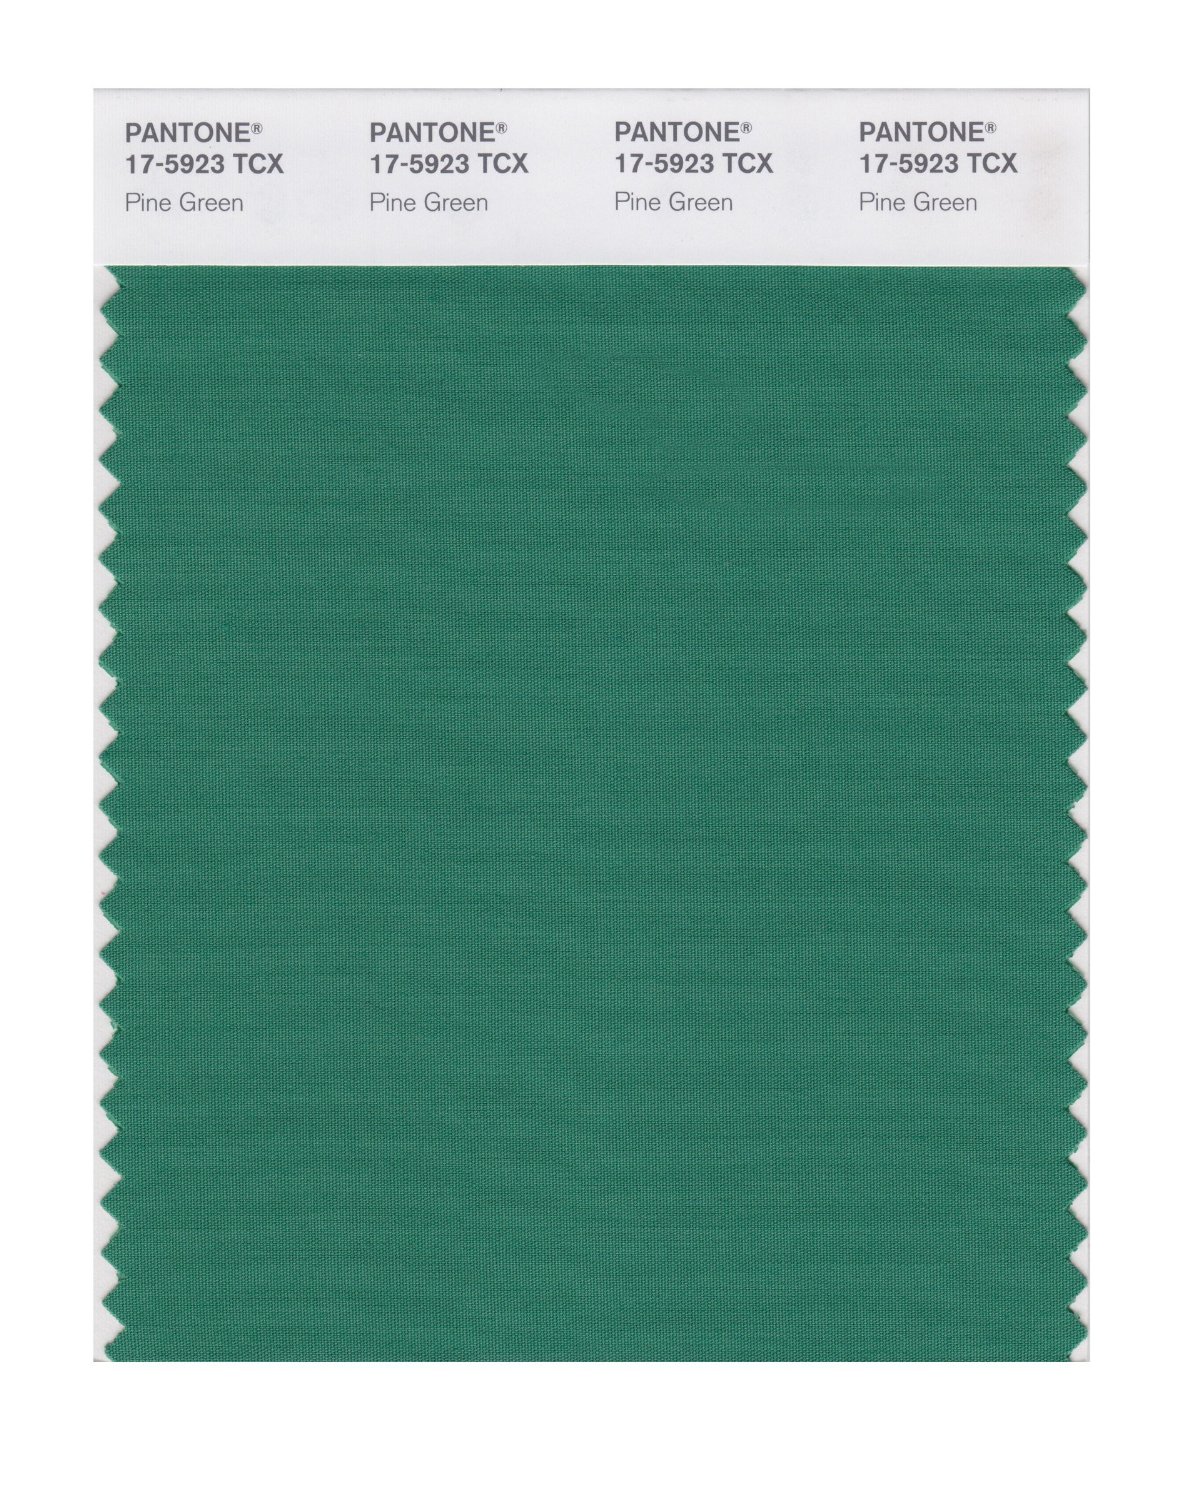 Pantone Cotton Swatch 17-5923 Pine Green